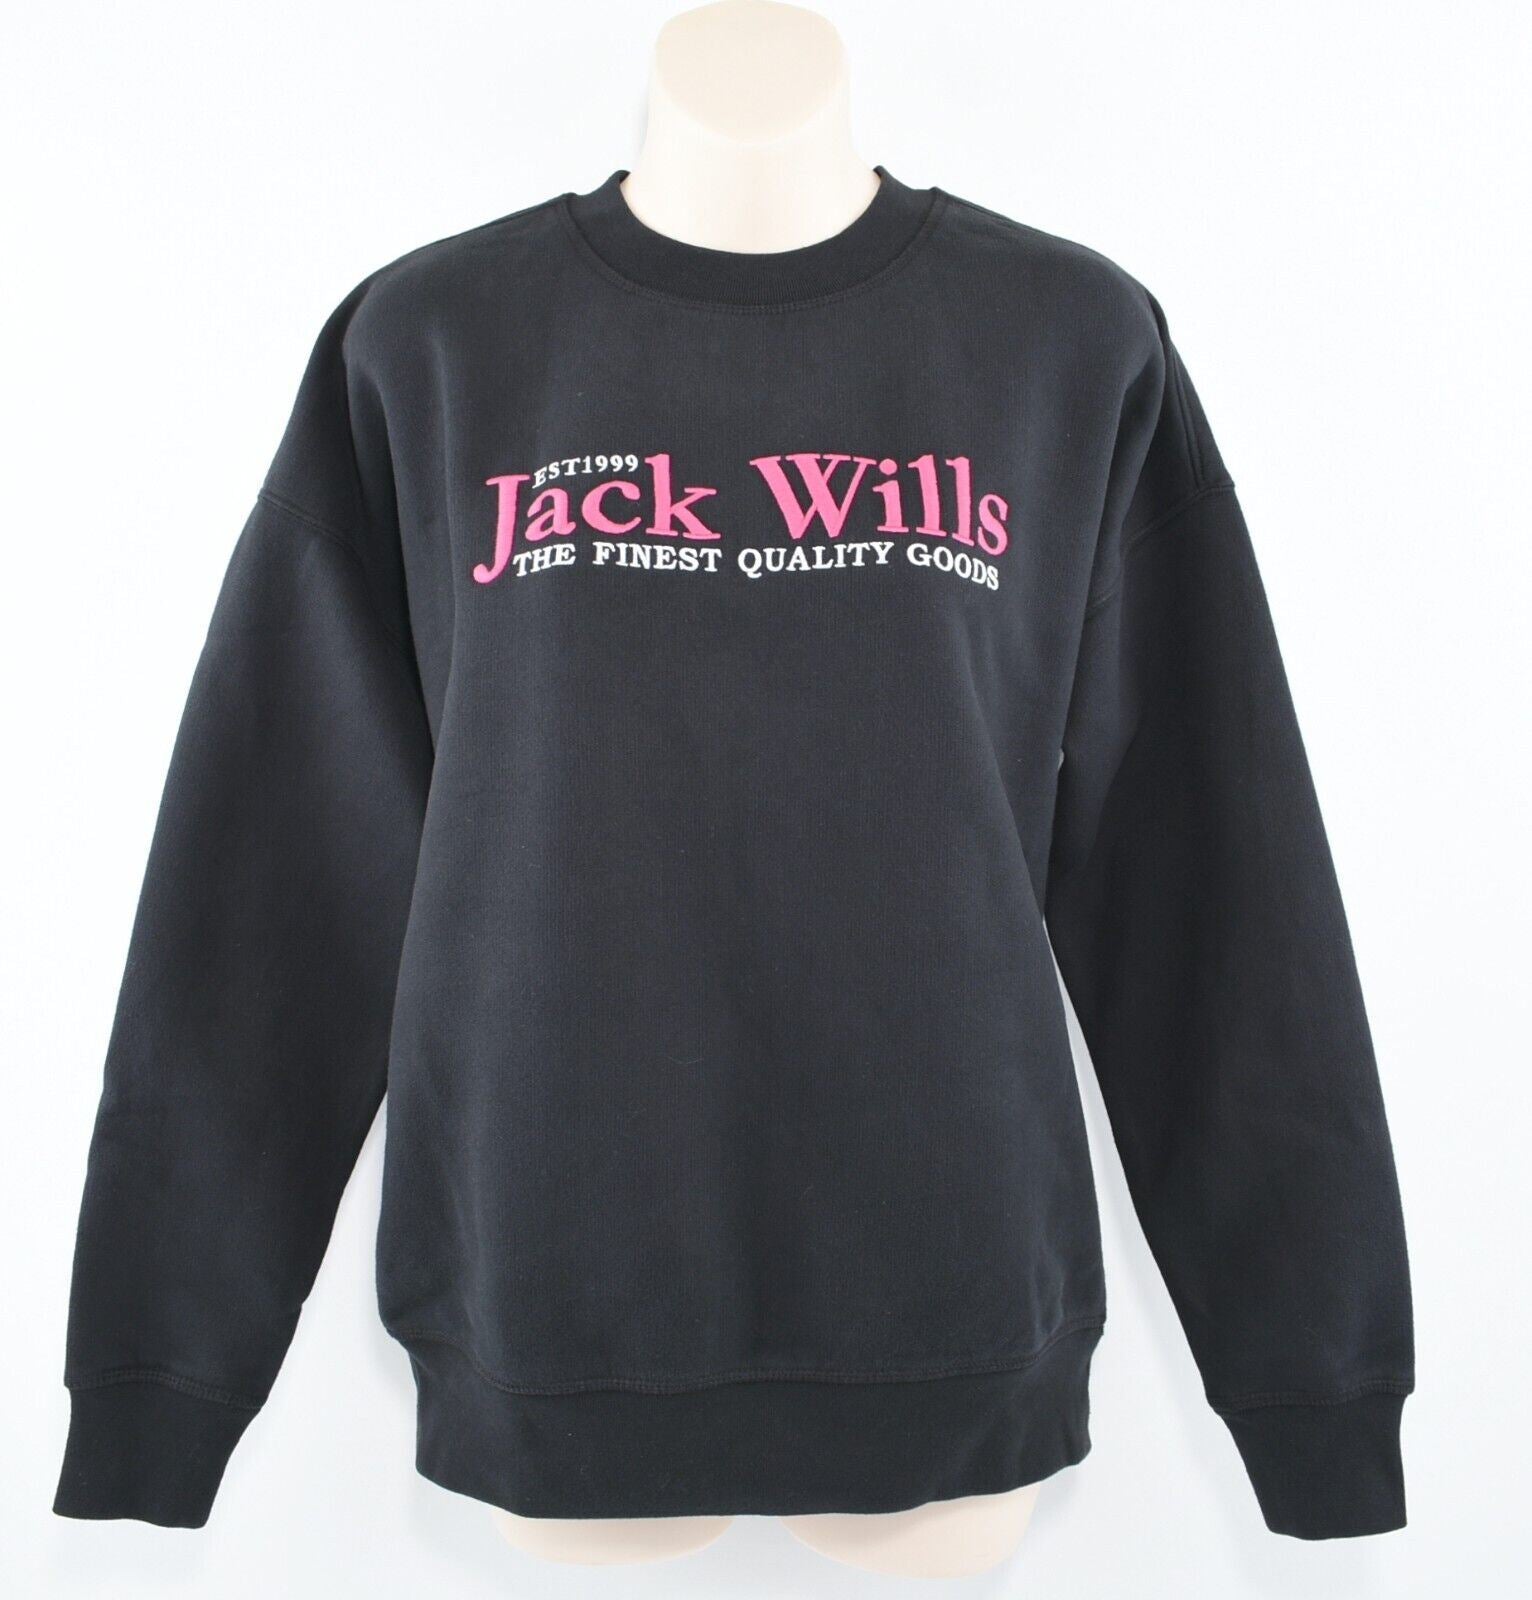 JACK WILLS Women's MANTON Boyfriend Crew Sweatshirt, Black, size XS (UK 8)